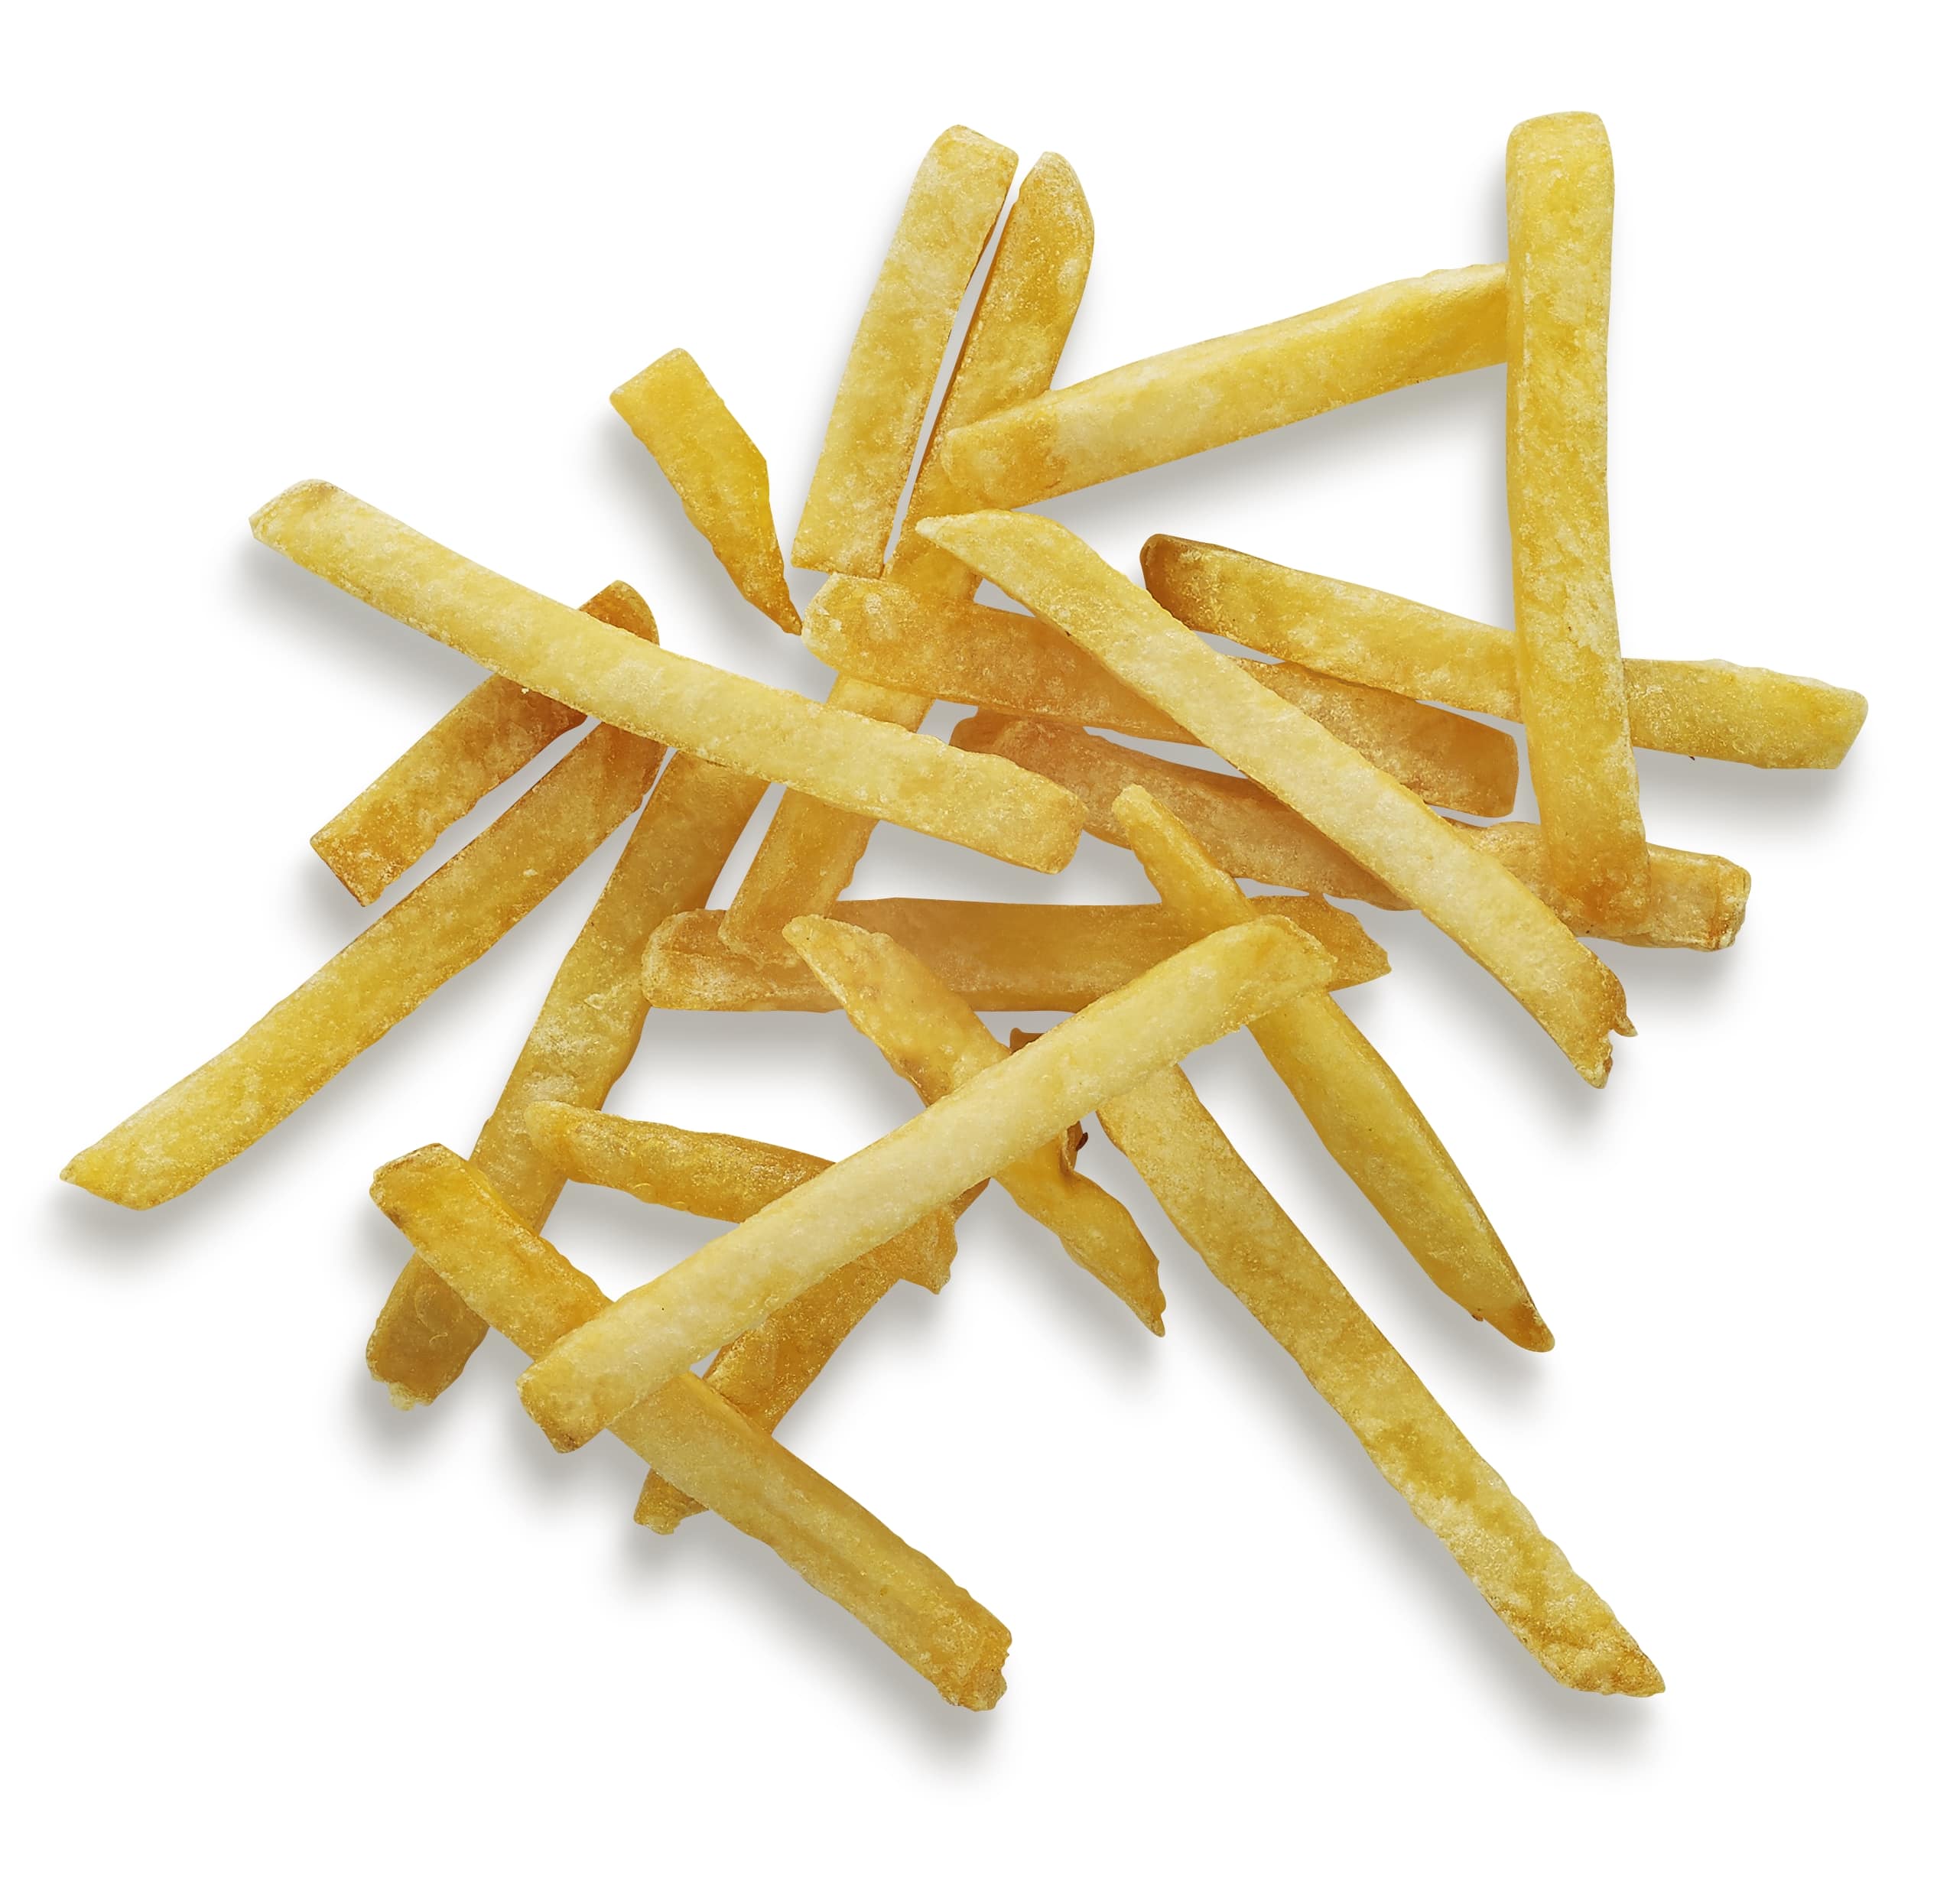 fries 9mm